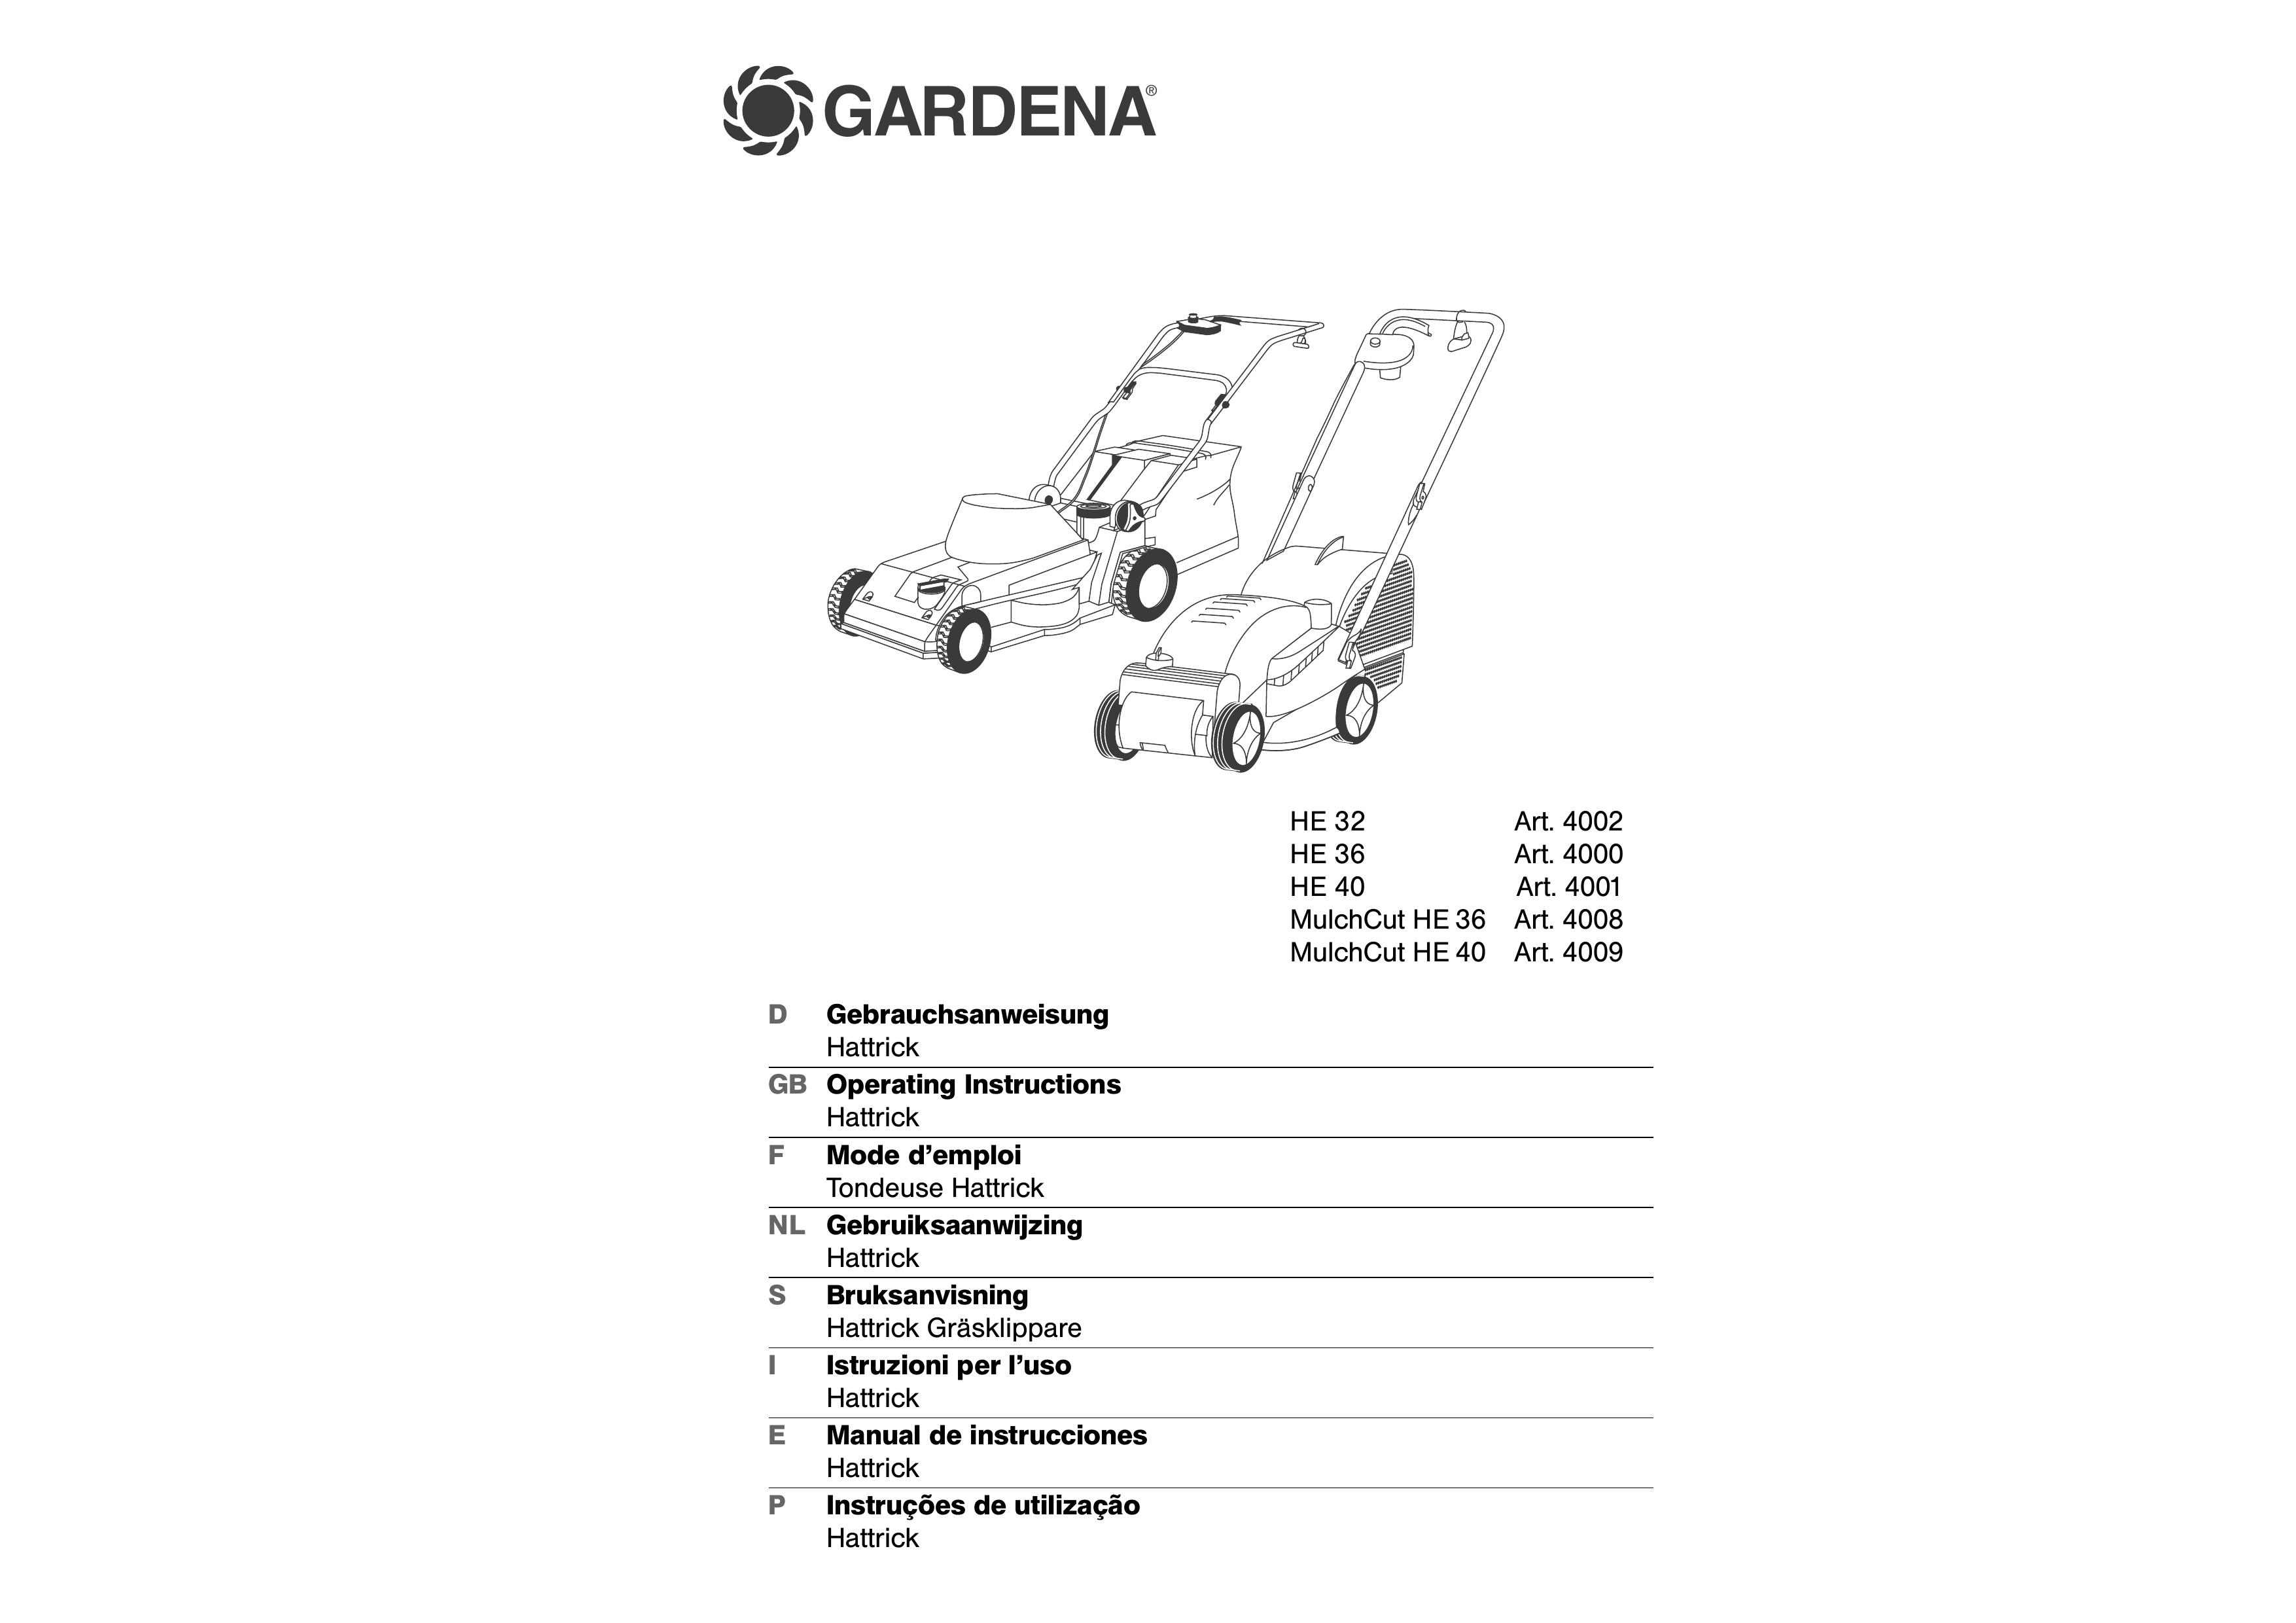 Gardena HE40 Lawn Mower User Manual